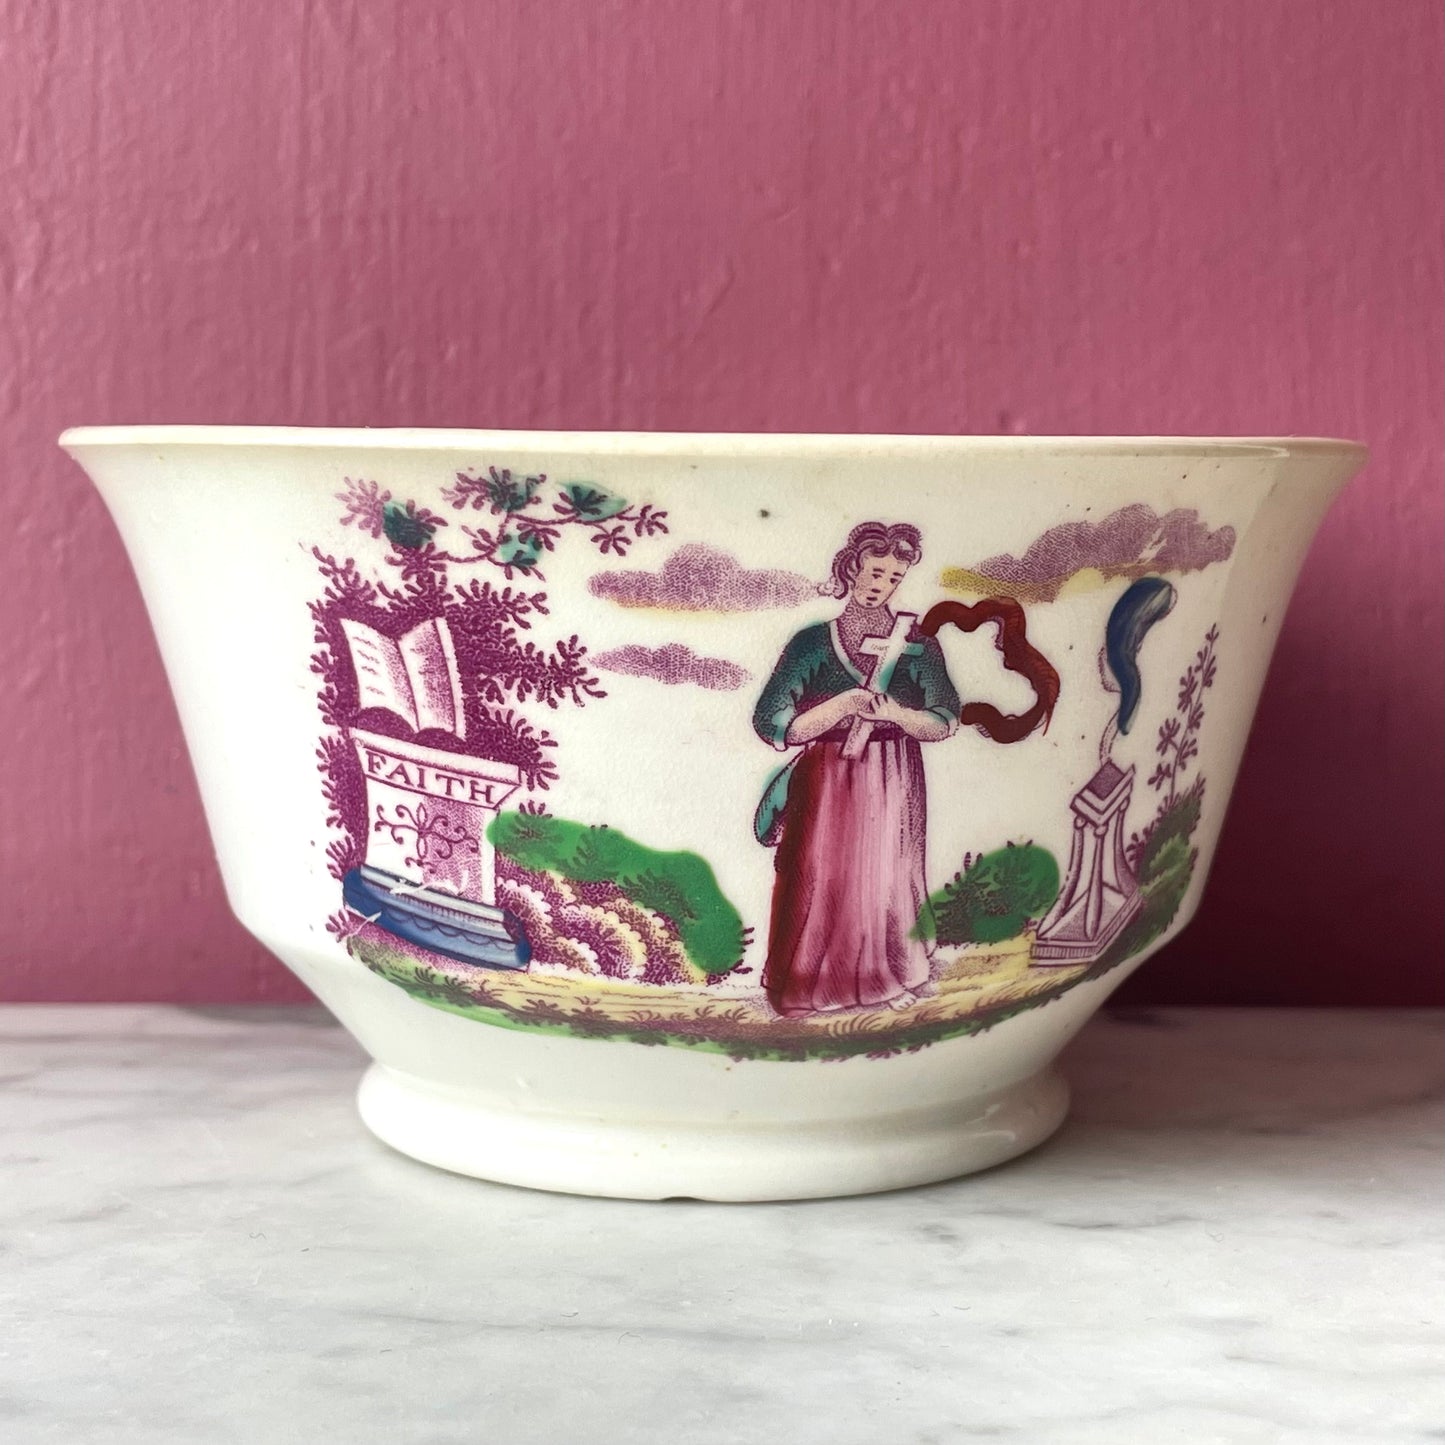 Faith & Hope | Antique Transferware Tea Bowl